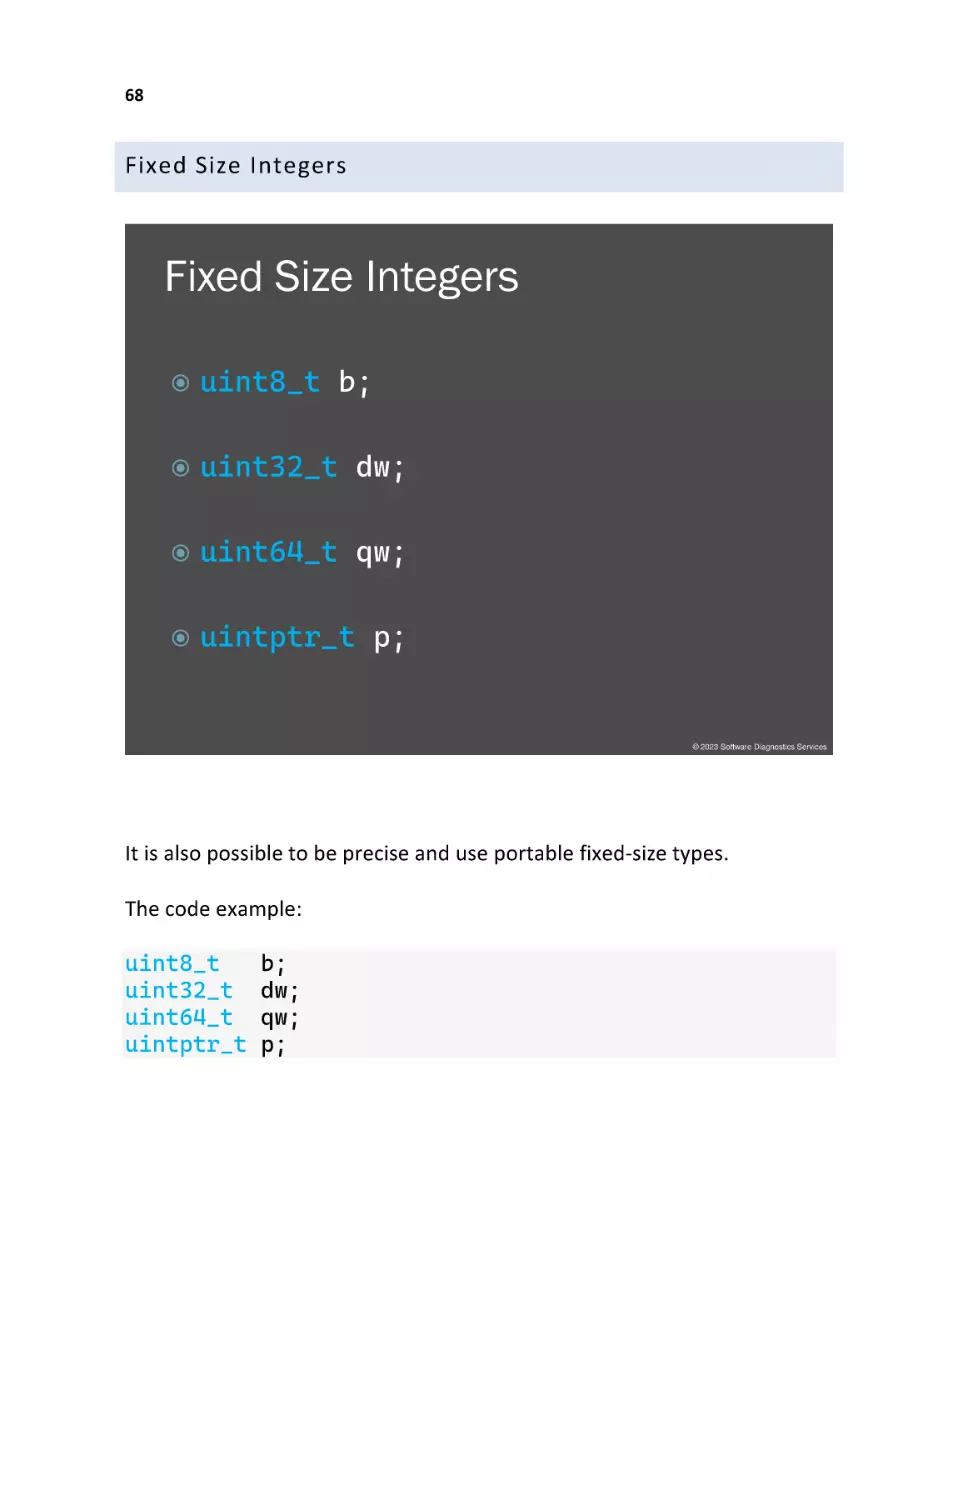 Fixed Size Integers